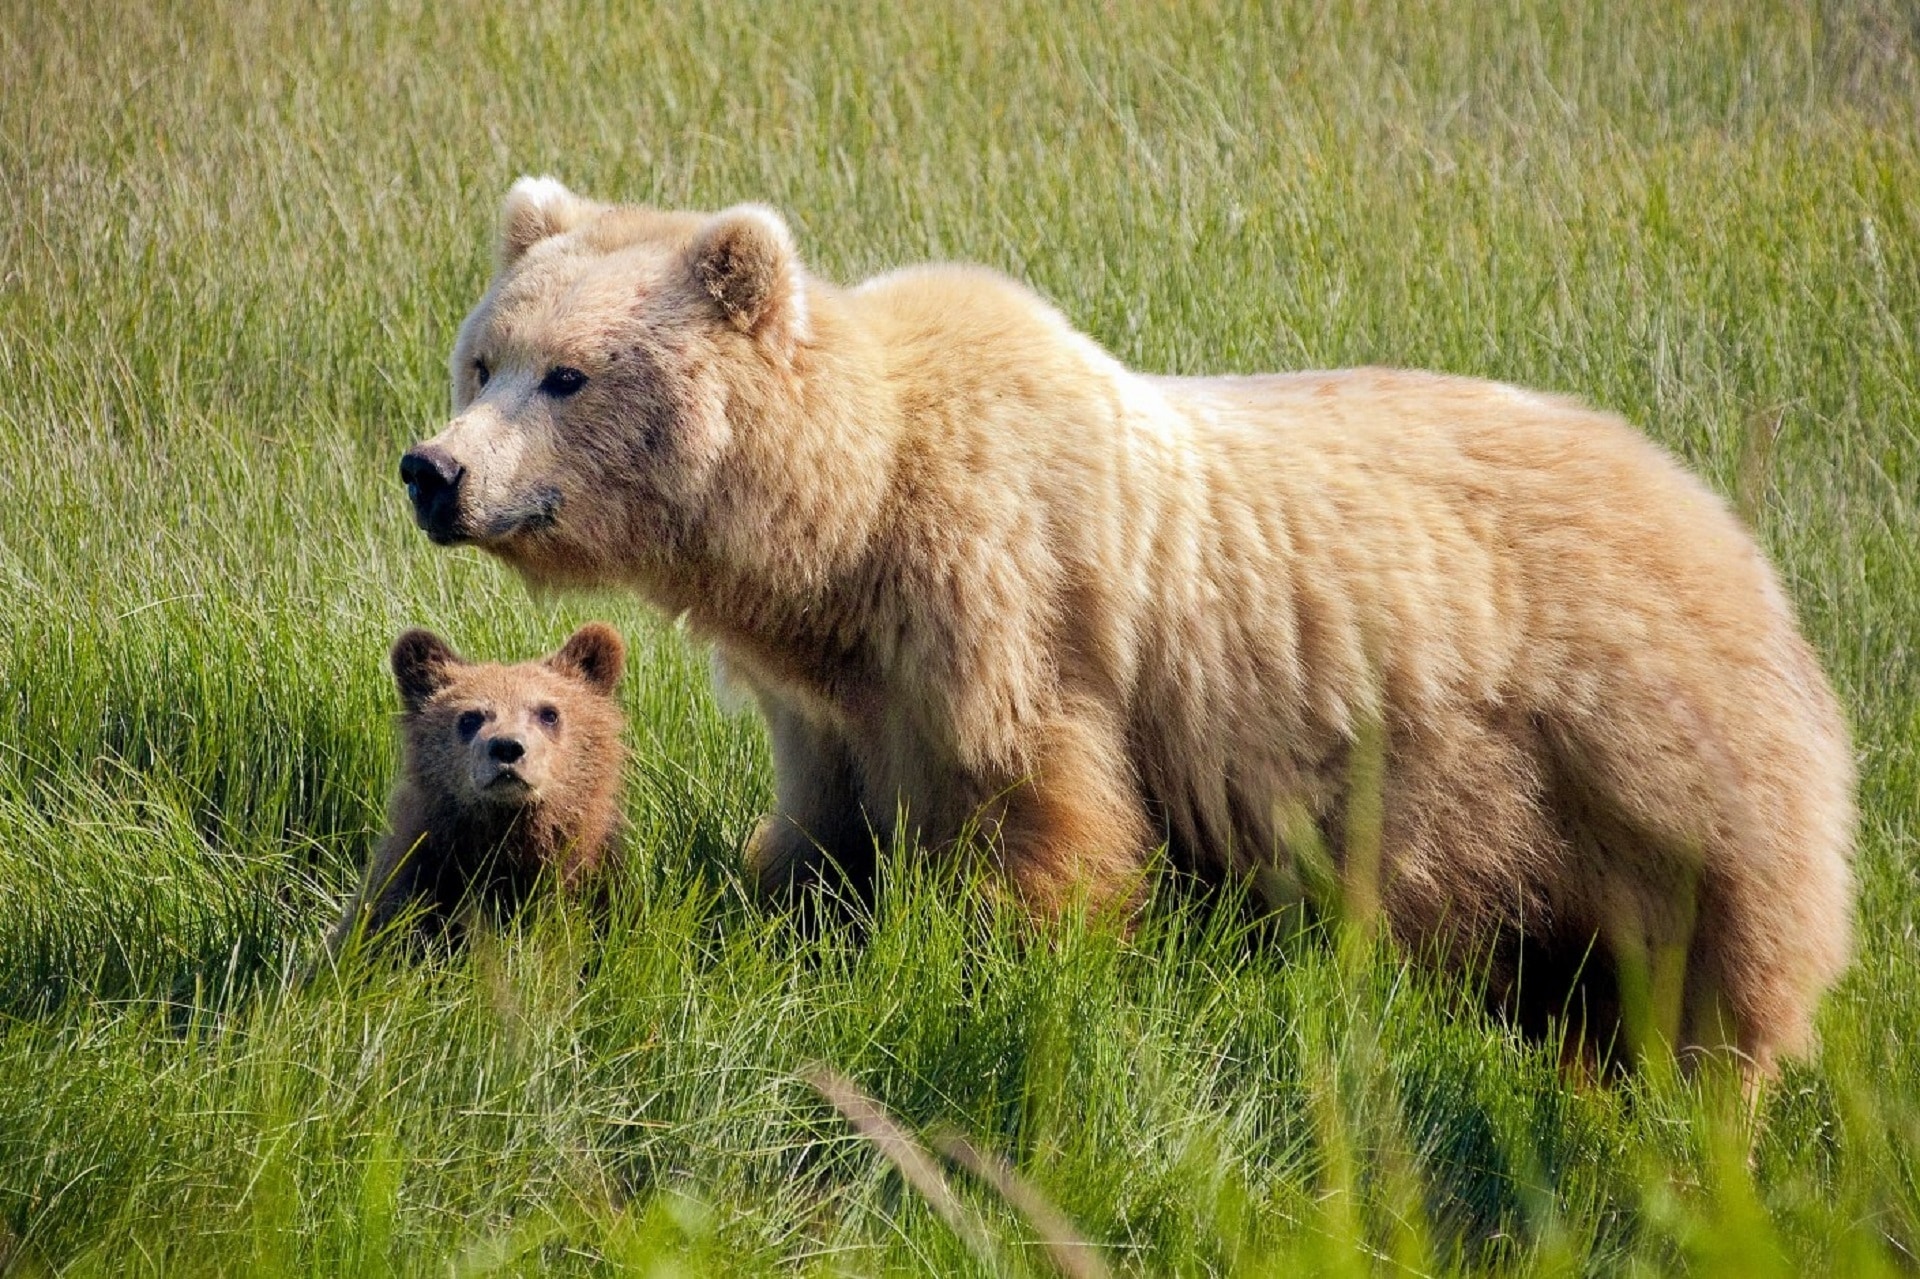 Cub, Female, Brown Bears, Sow, Portrait, grass, animal wildlife